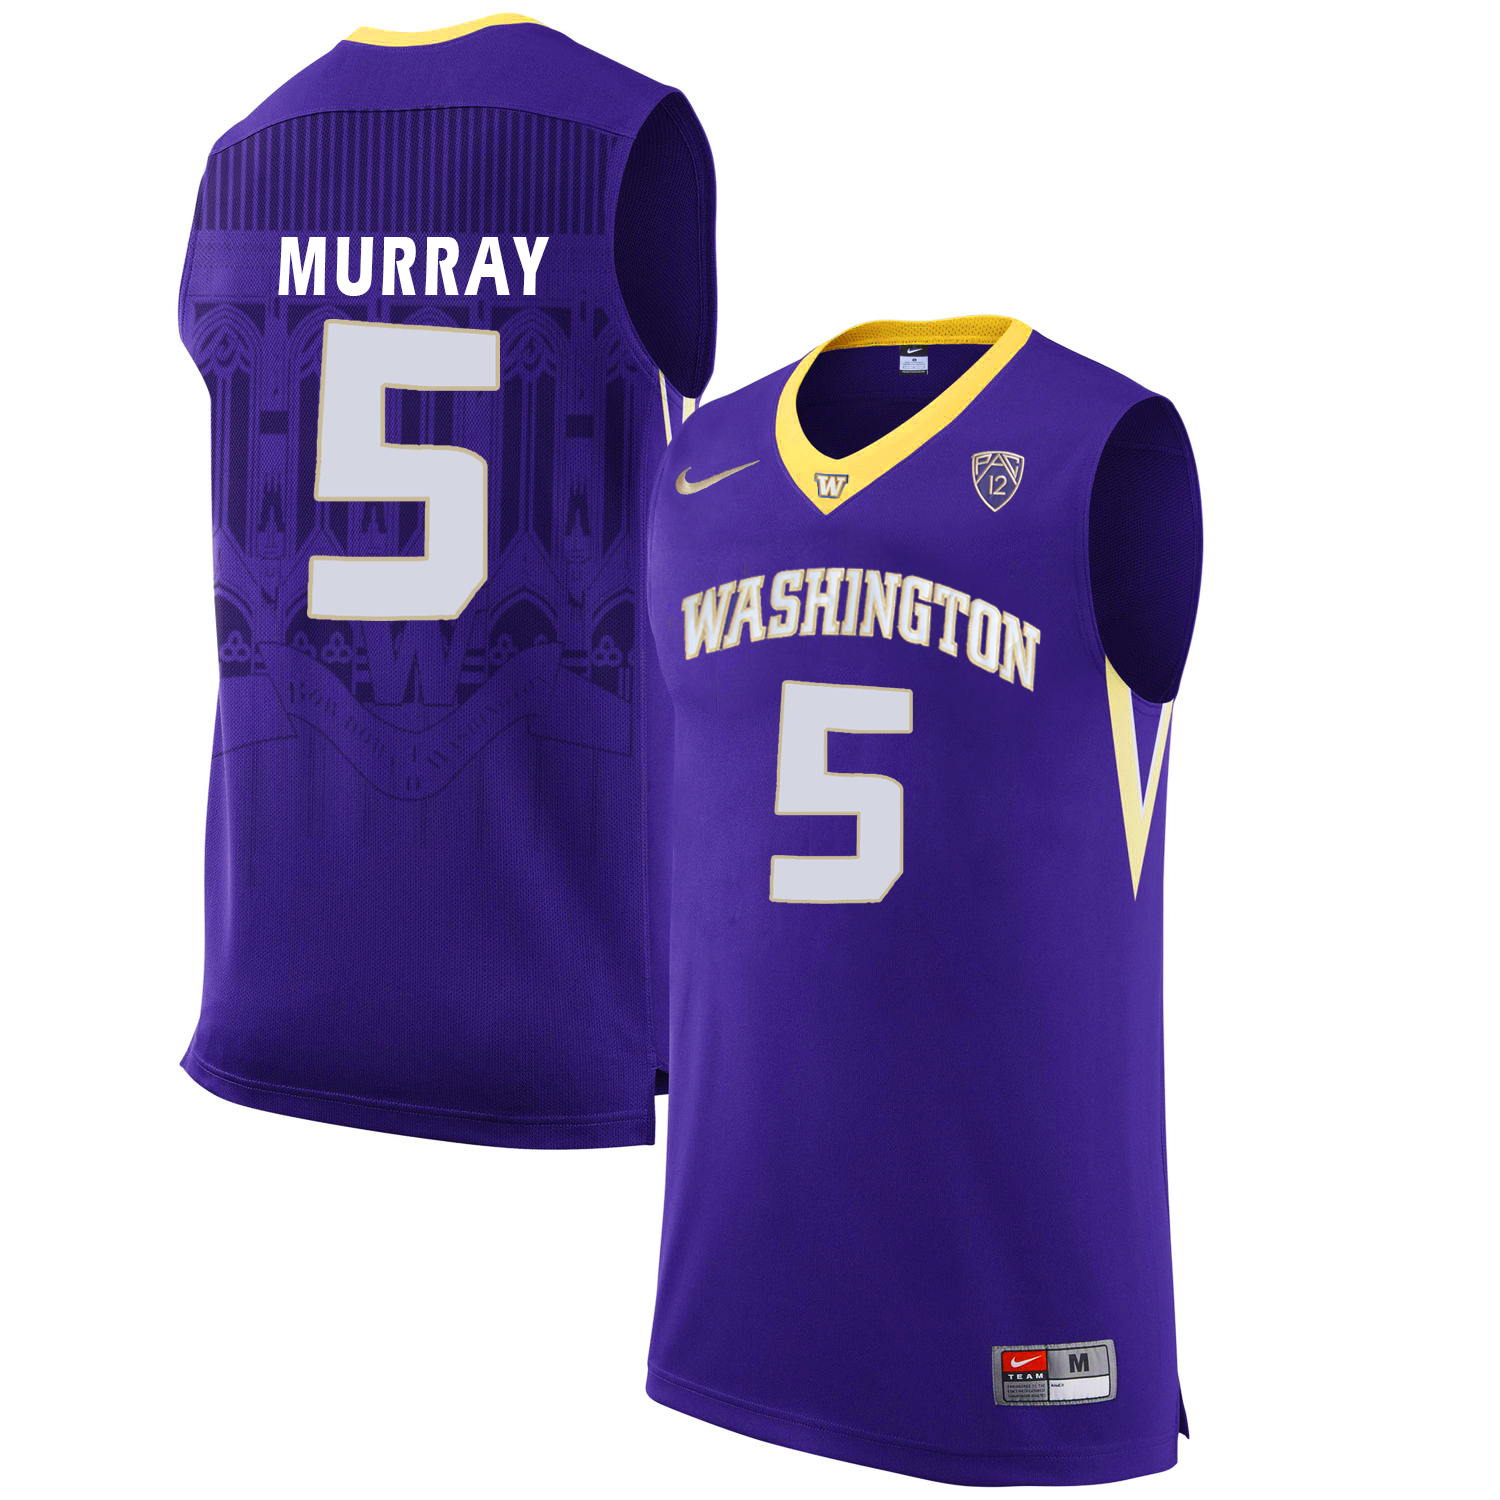 Washington Huskies 5 Dejounte Murray Purple College Basketball Jersey